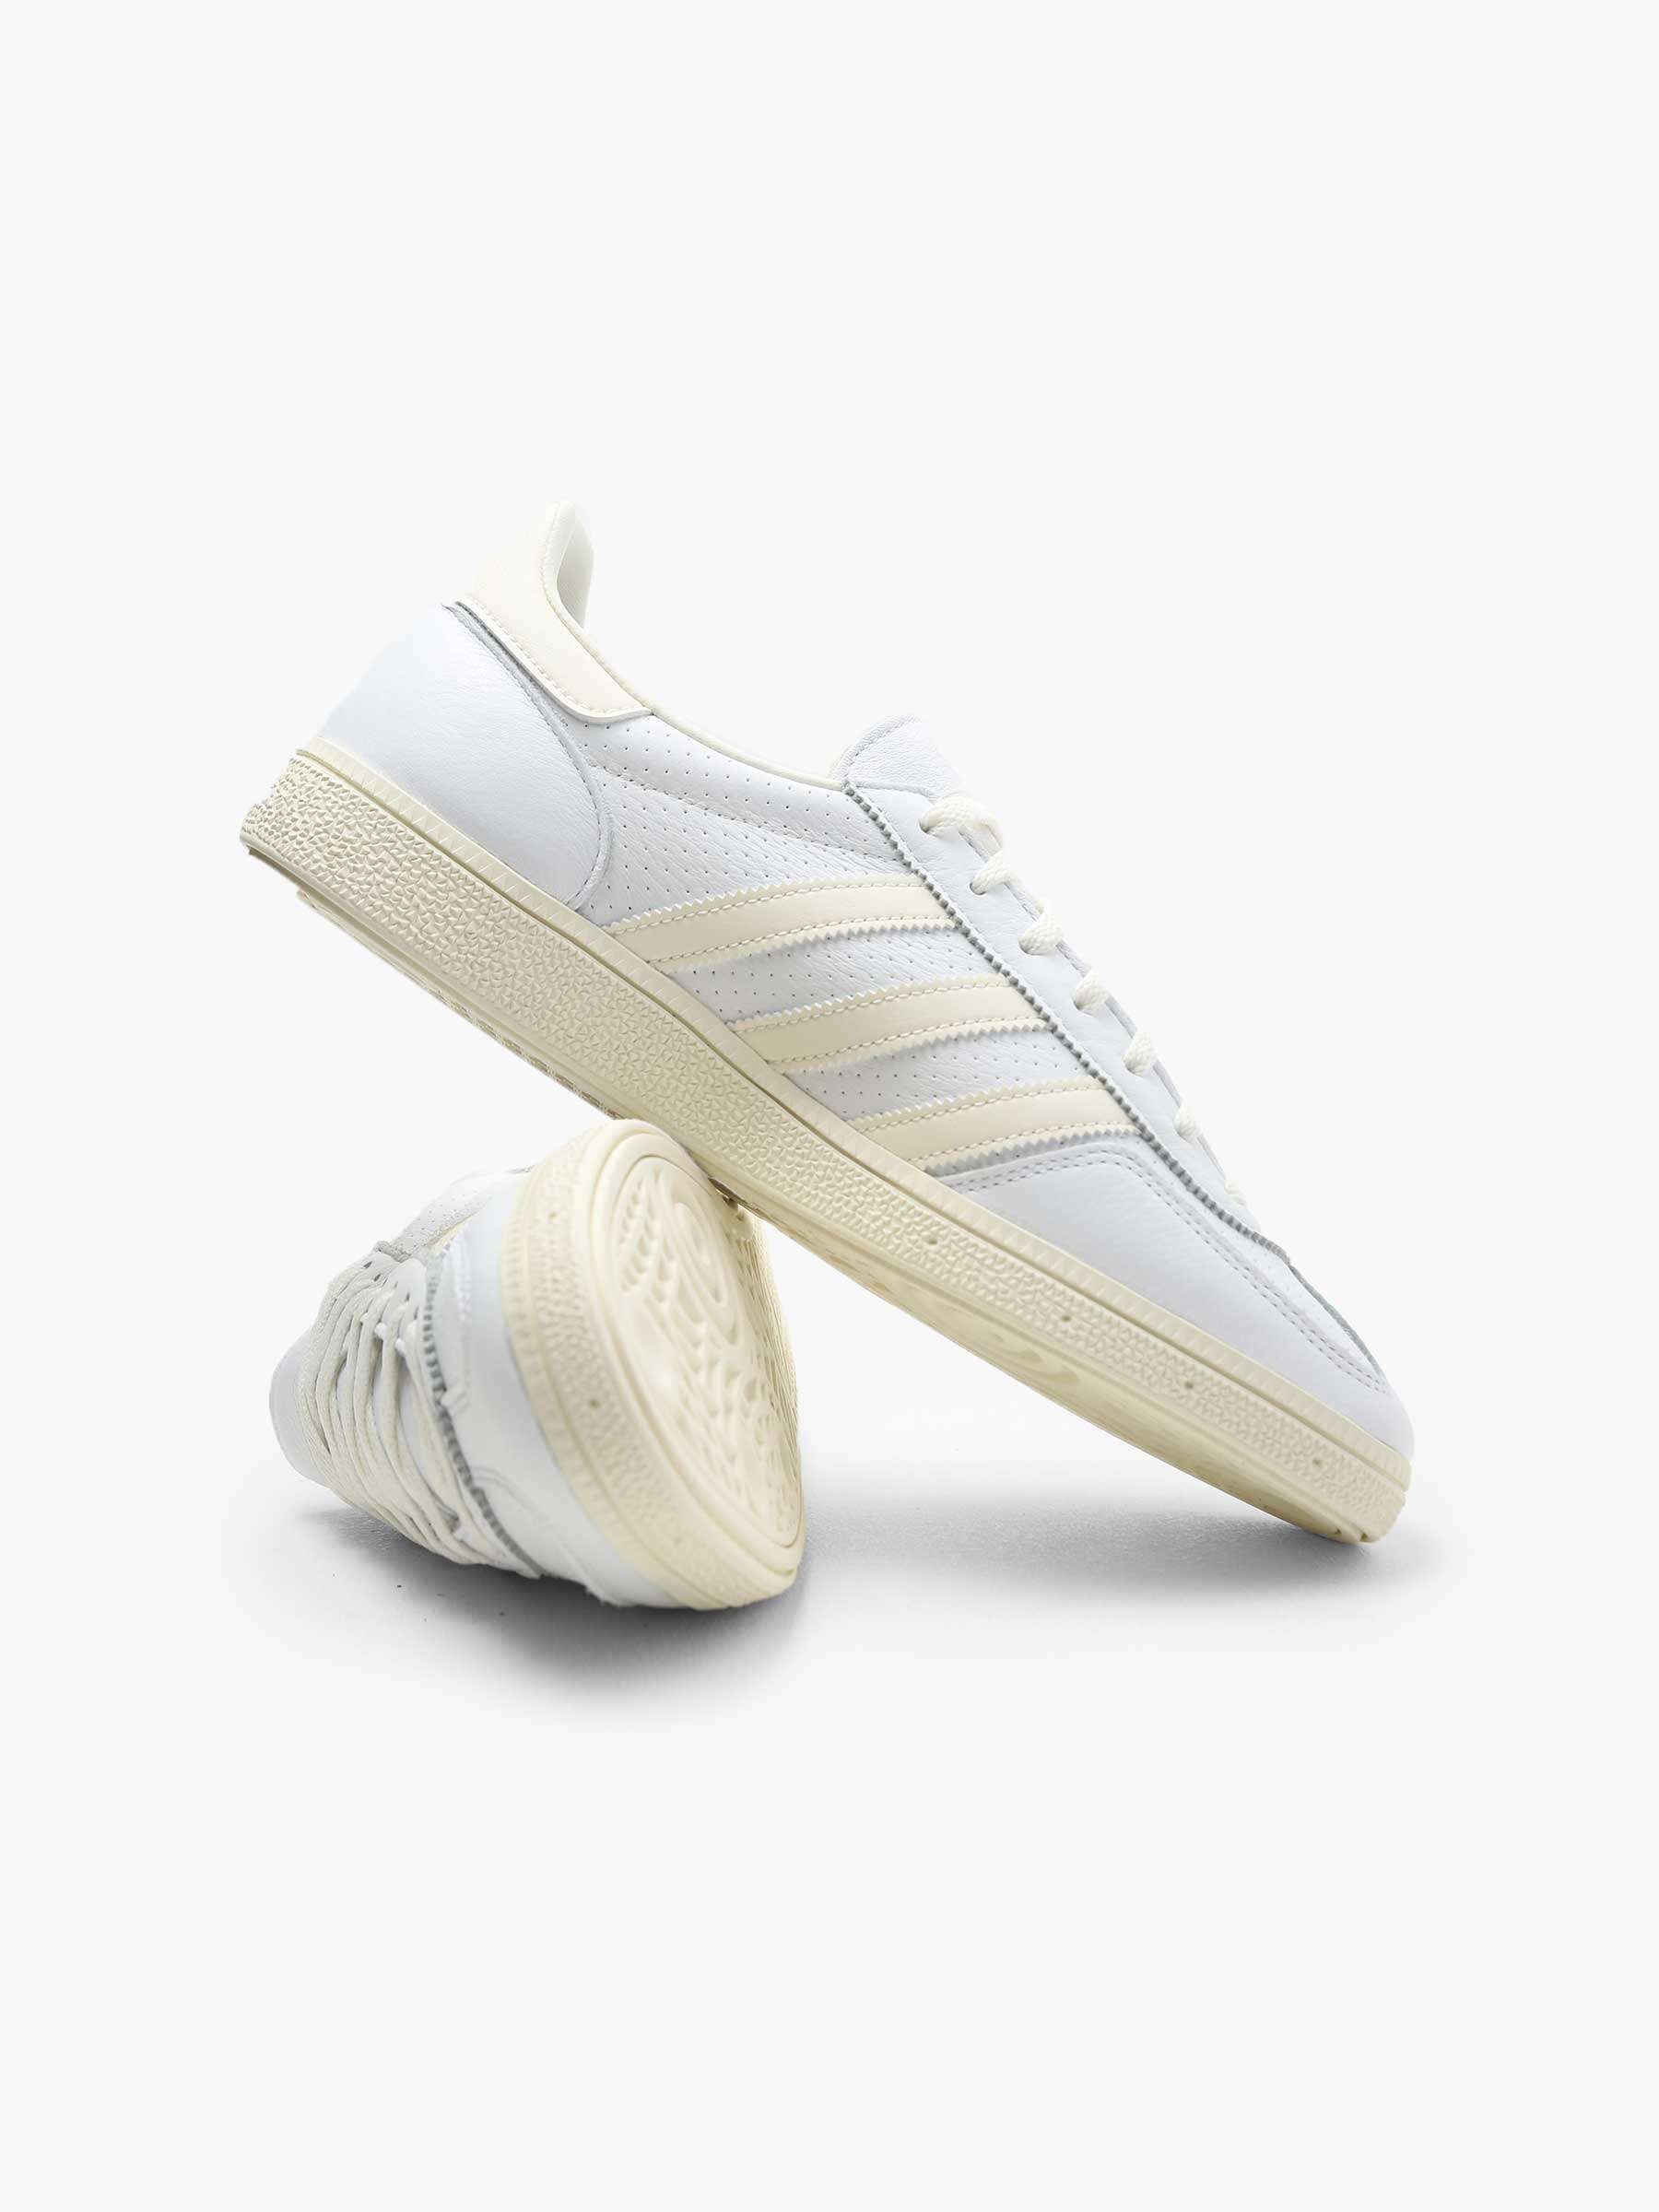 Handball Spezial Footwear White Off White IE9837